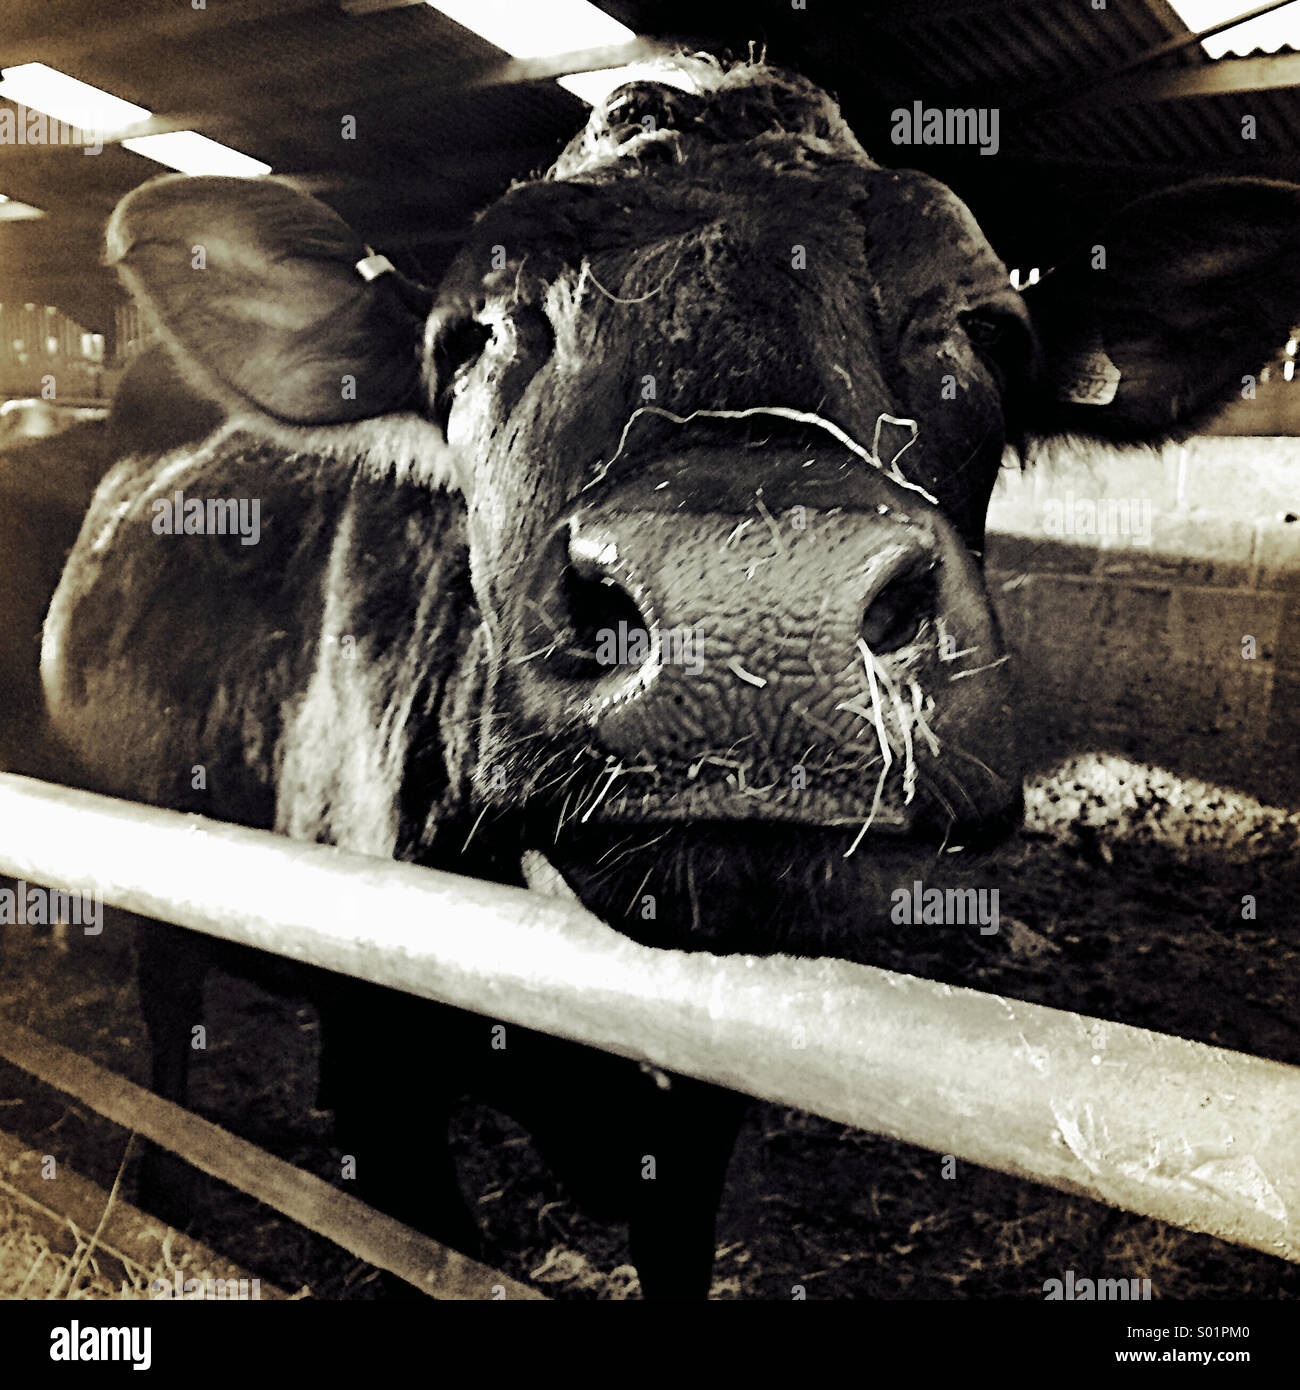 Cow in barn Stock Photo